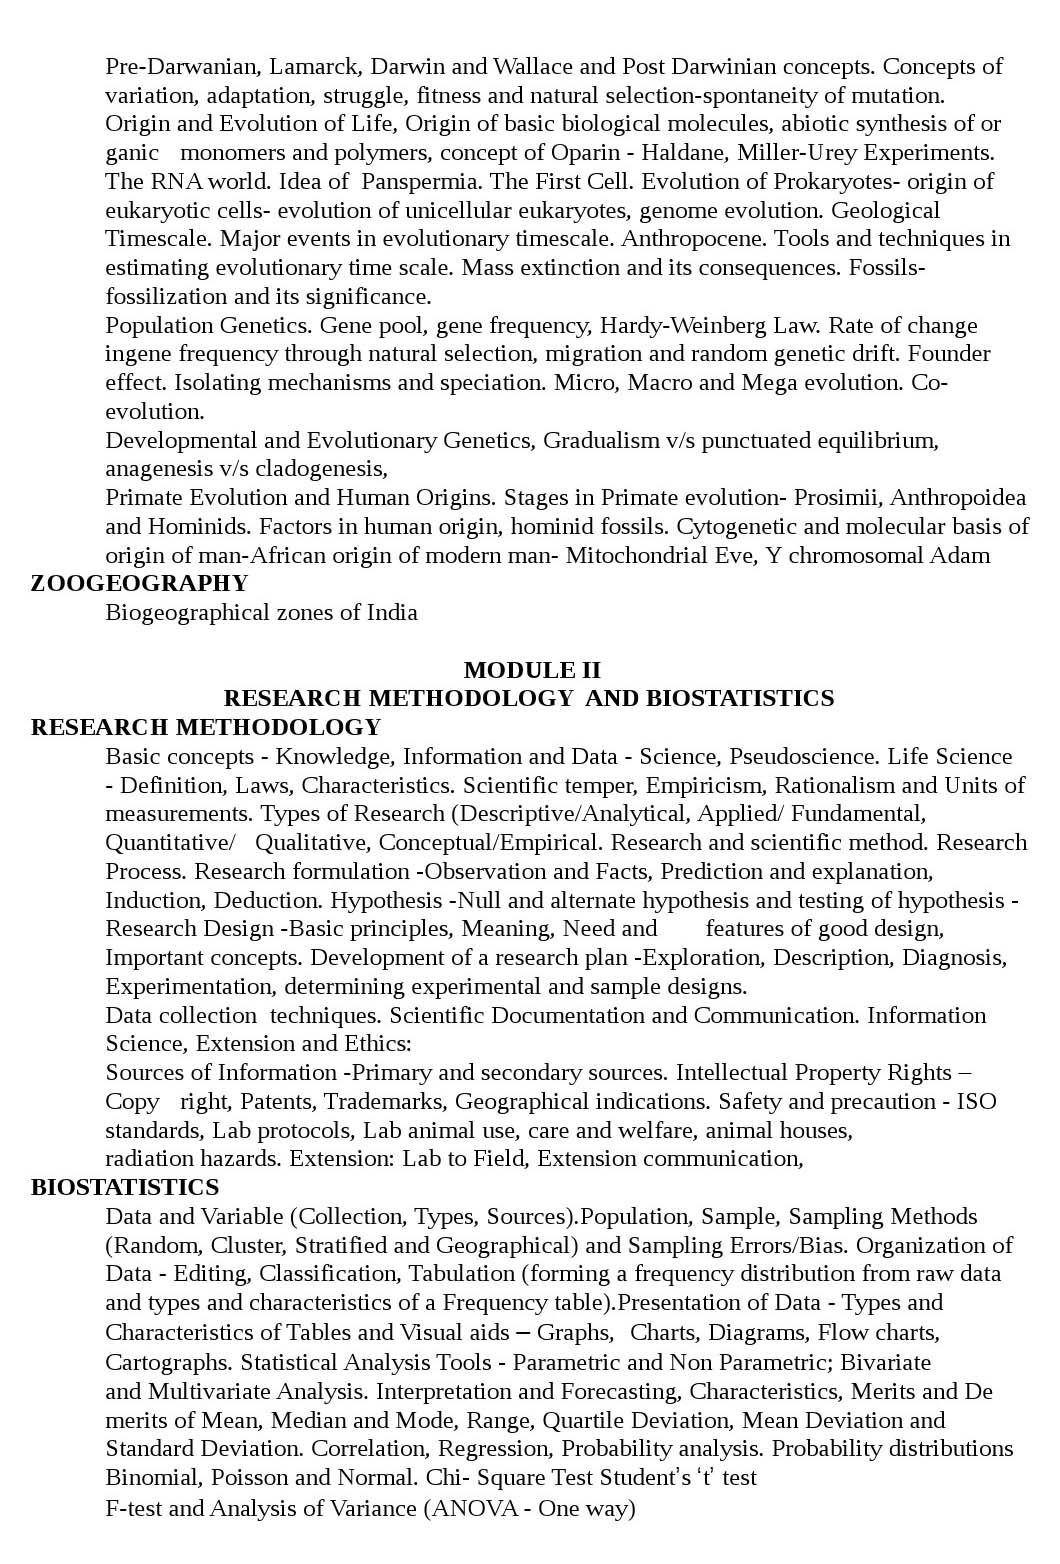 Kerala PSC Assistant Professor Zoology Exam Syllabus - Notification Image 2